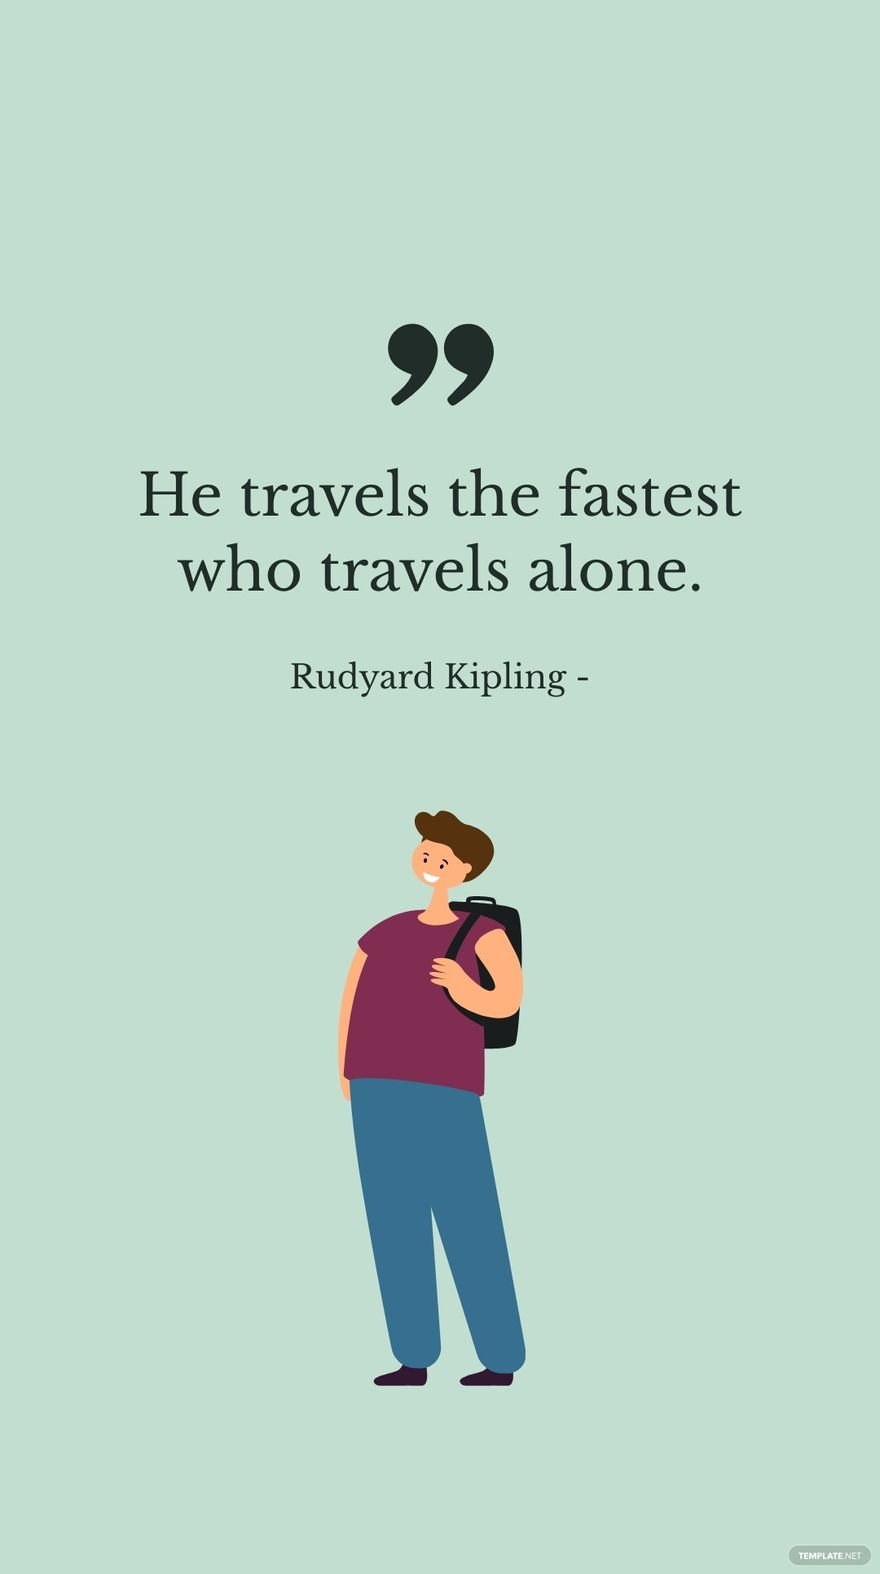 Free Rudyard Kipling - He travels the fastest who travels alone. in JPG